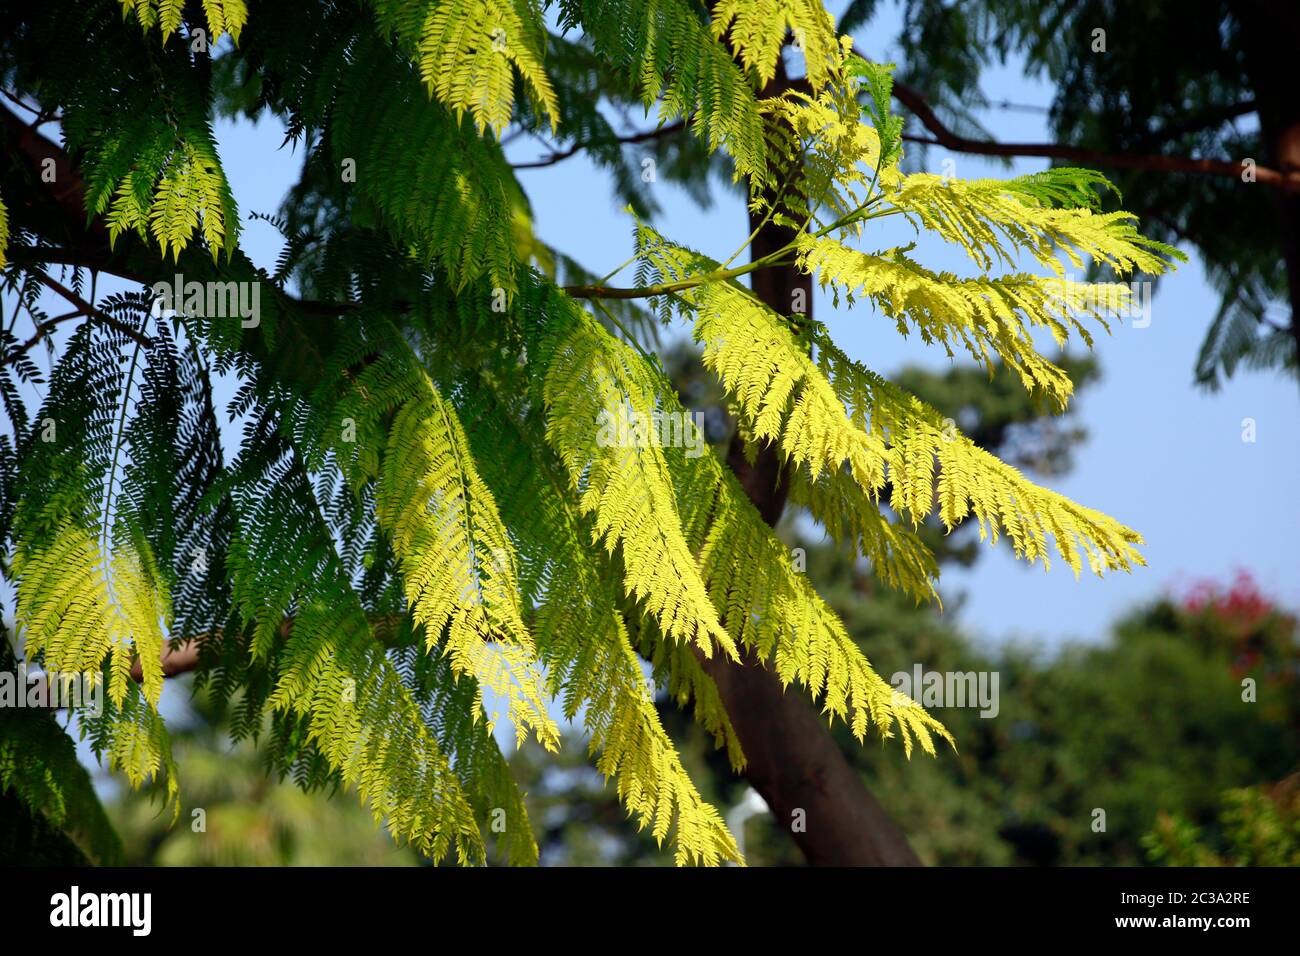 Palisanderholzbaum (Jacaranda mimosifolia), Kyrenia/Girne, Türkische Republik Nordzypern Foto Stock